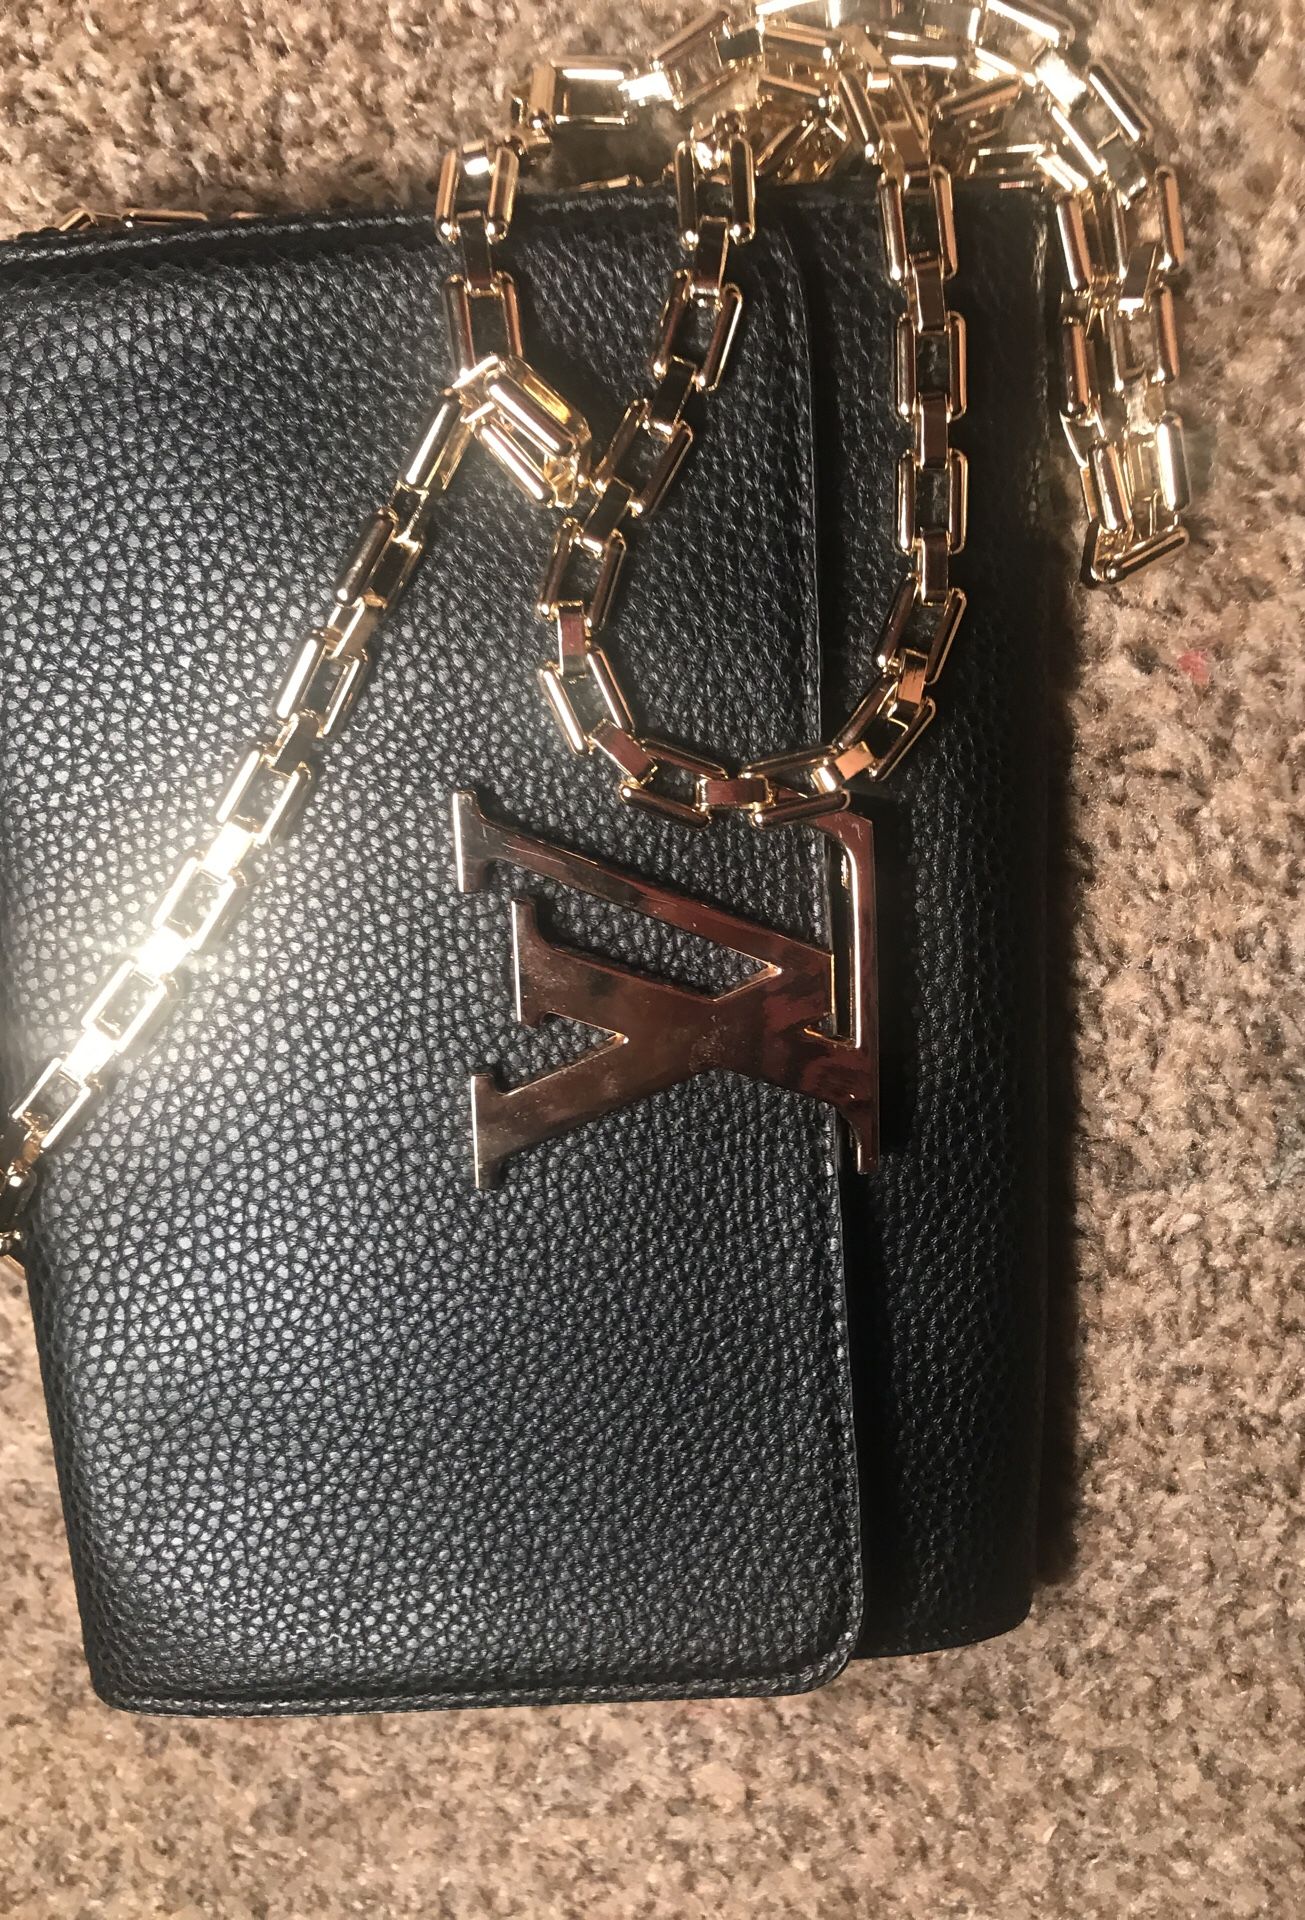 Small clutch cross over body purse